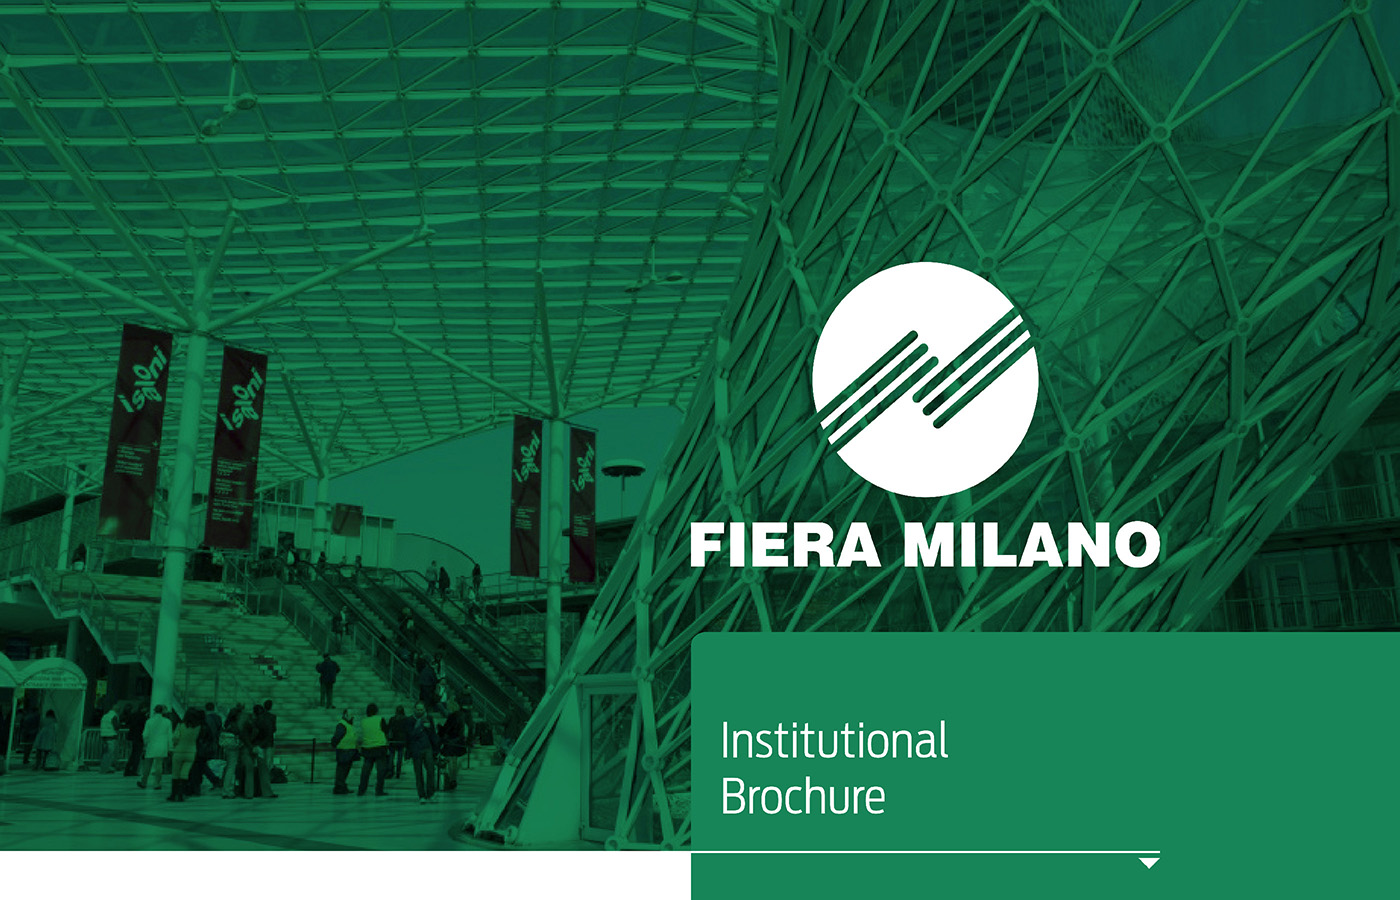 Institutional Brochure Fiera Milano